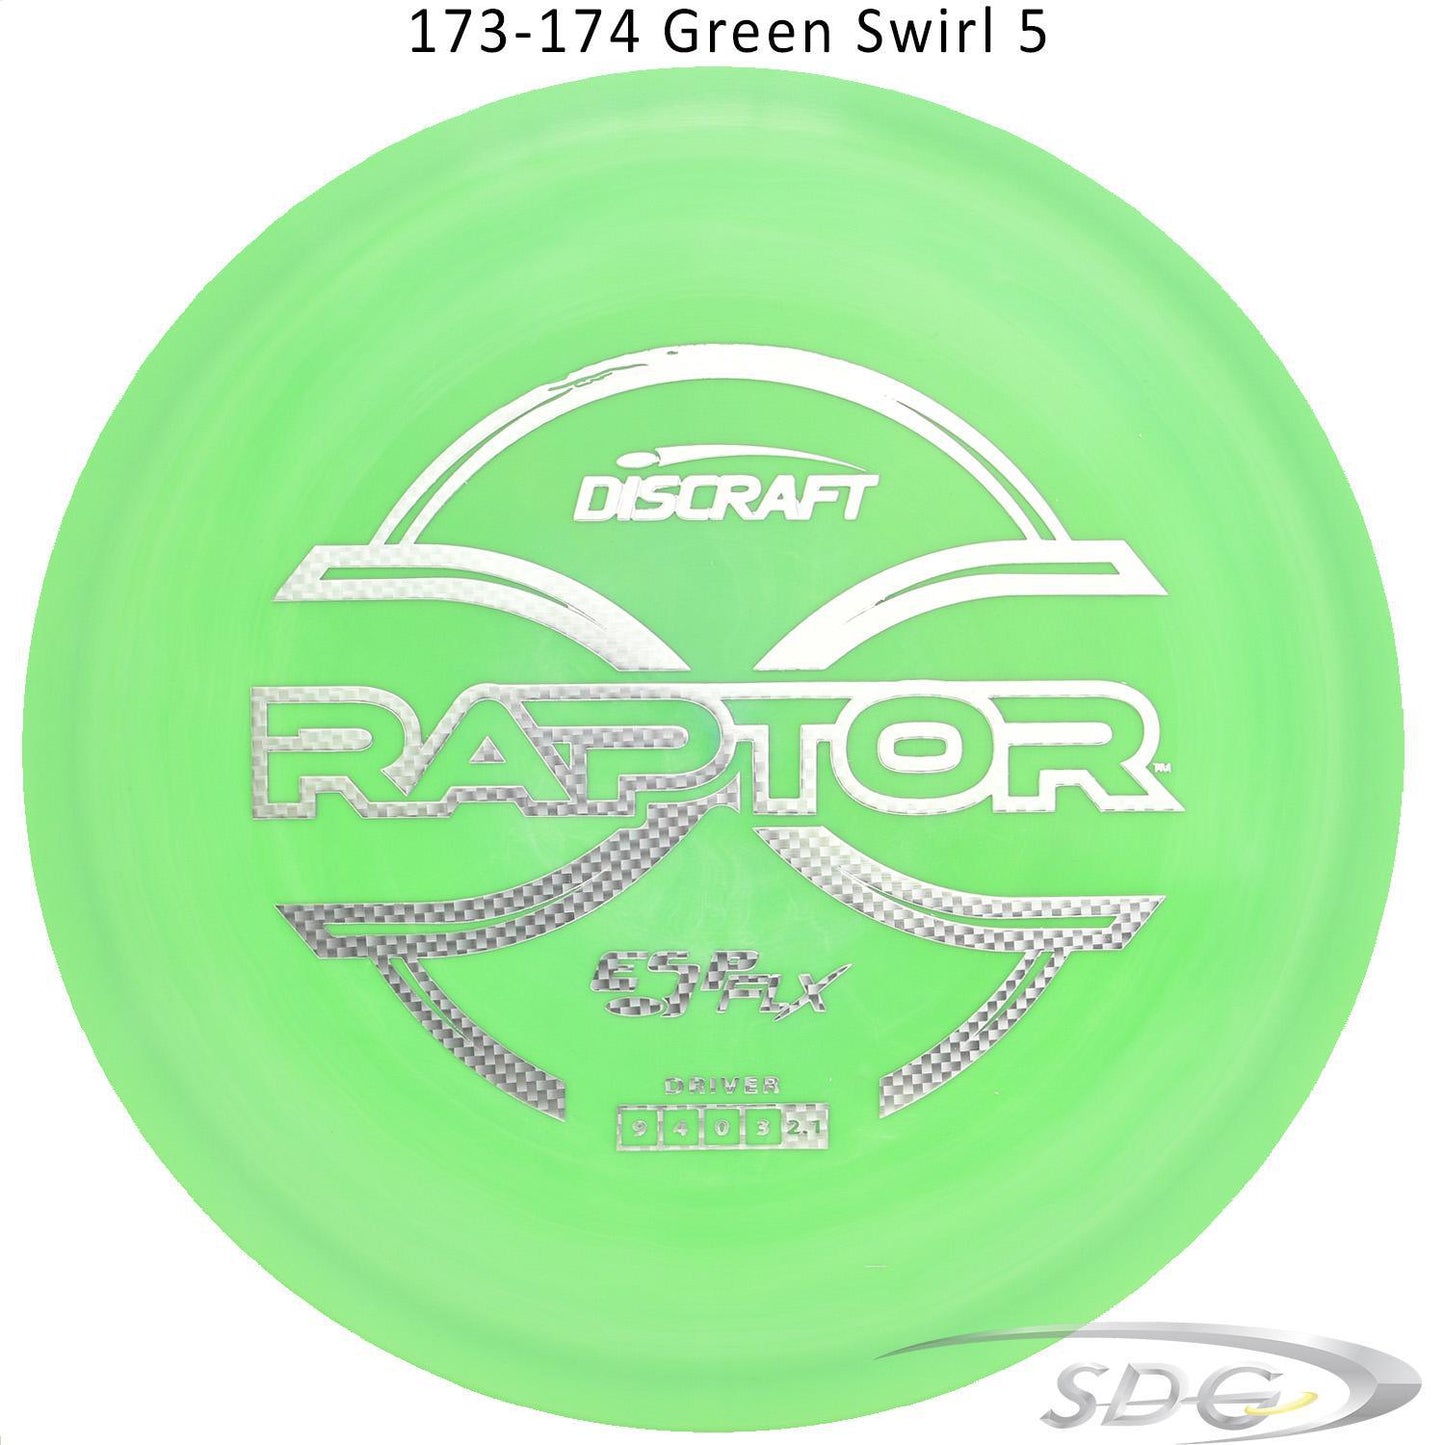 discraft-esp-flx-raptor-disc-golf-distance-driver 173-174 Green Swirl 5 